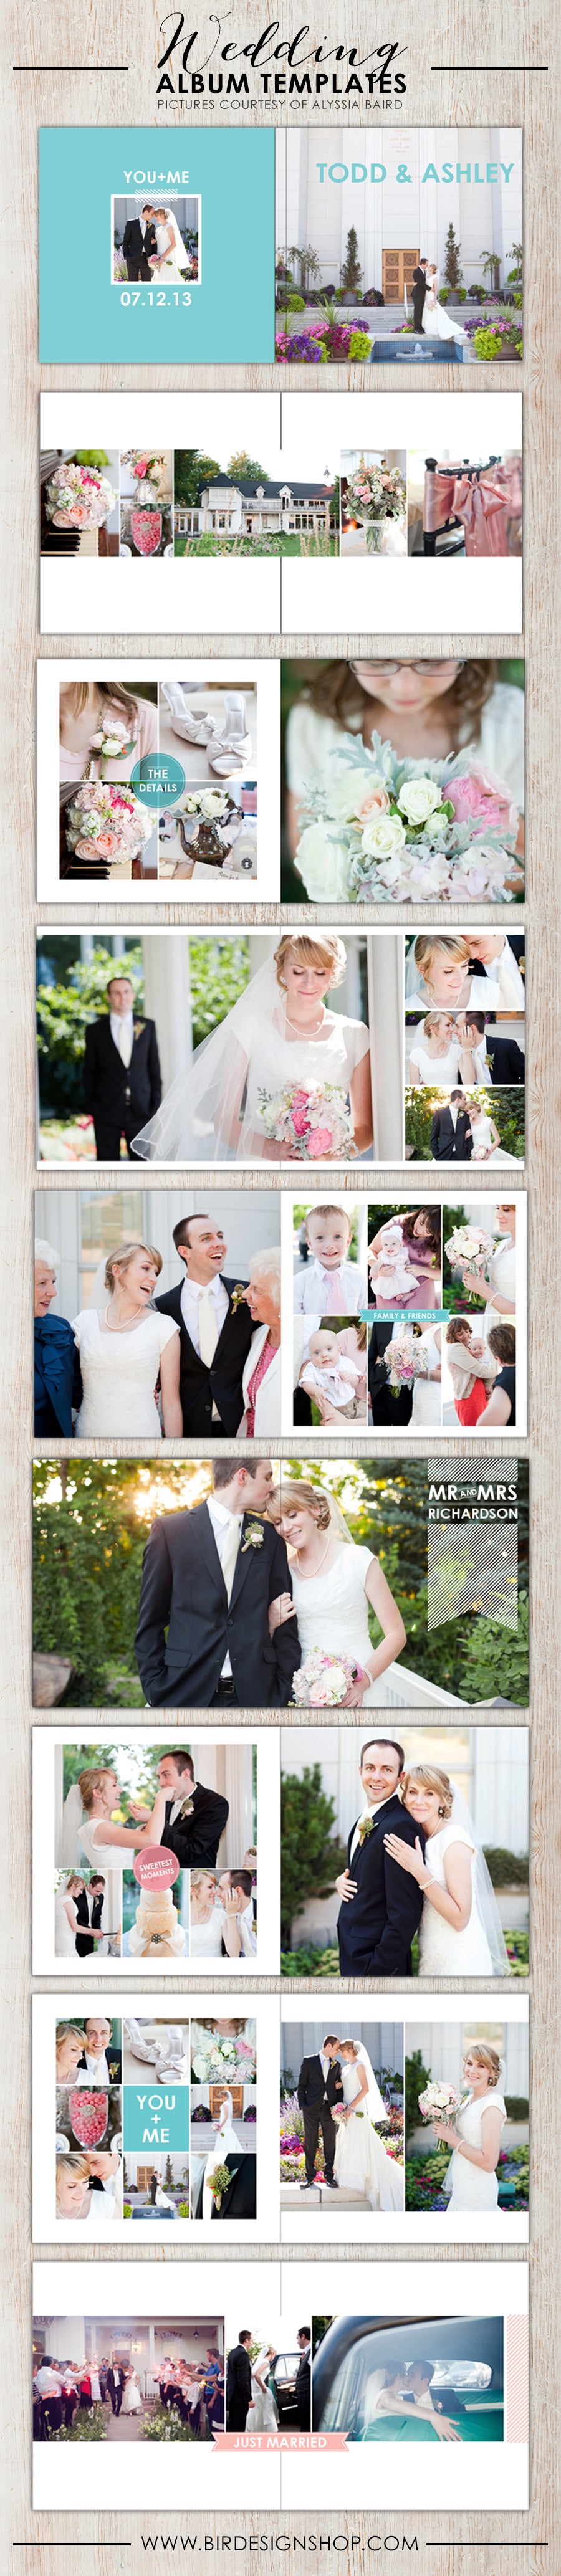 Photoshop wedding album templates